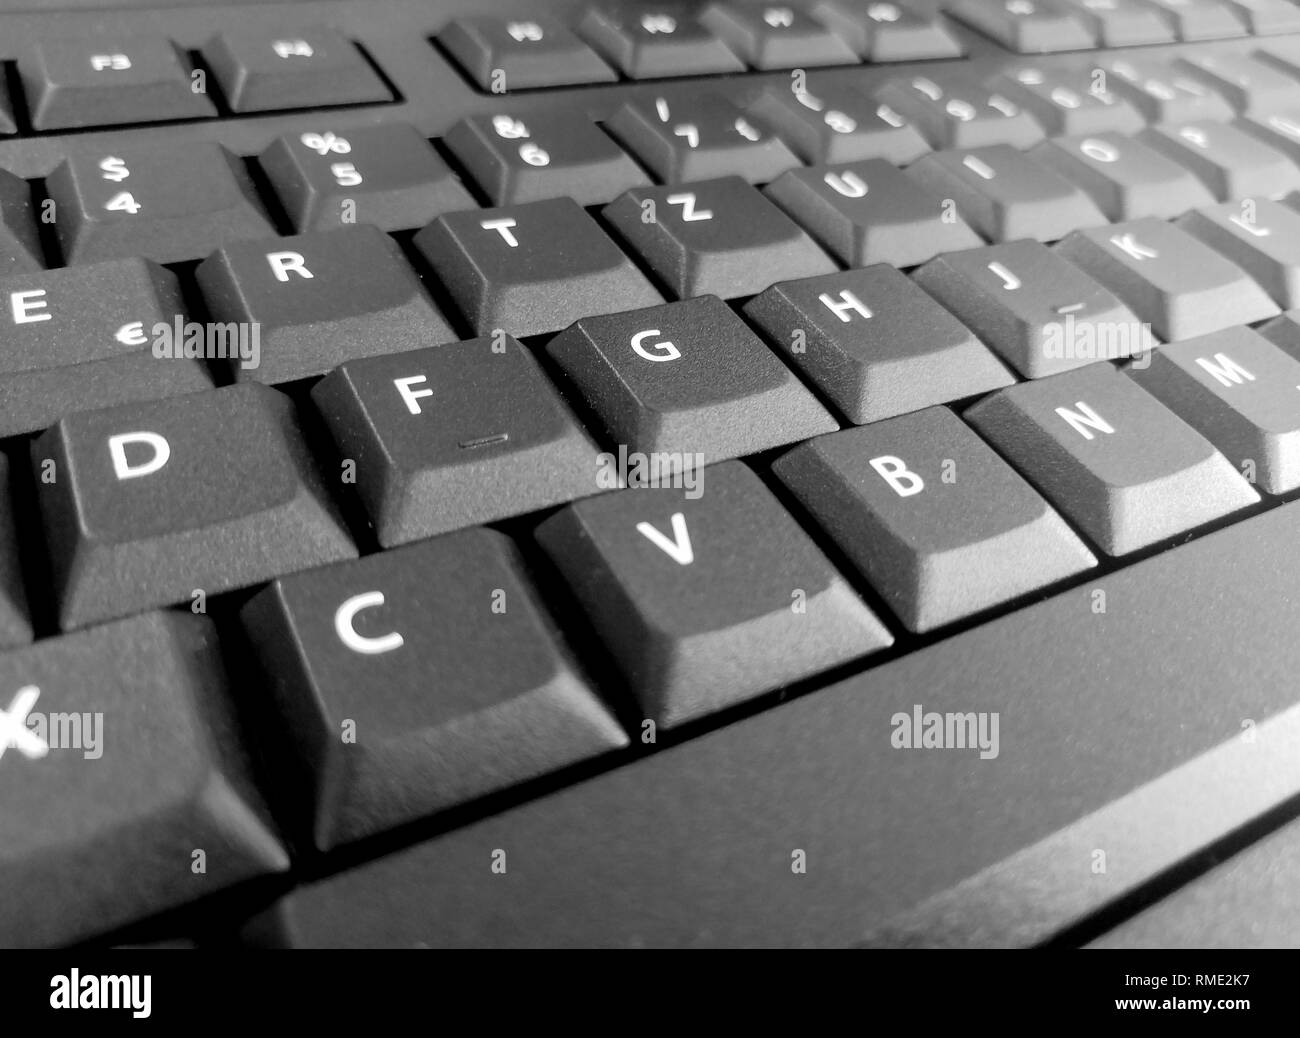 keyboard closeup black big letters qwertz Stock Photo